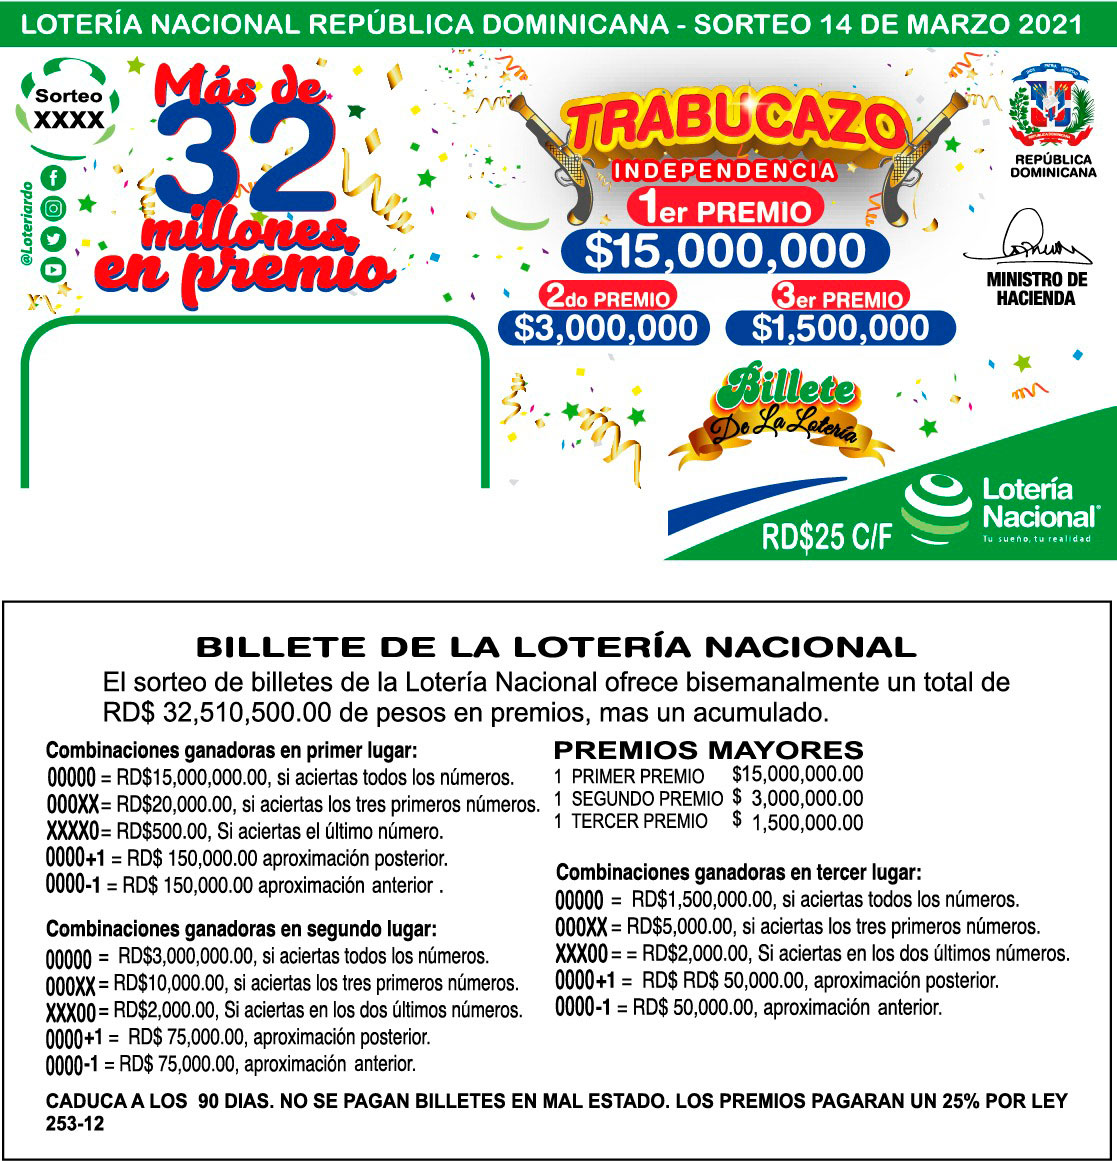 Listado De Billetes De La Loteria Nacional Dominicana LETOHA